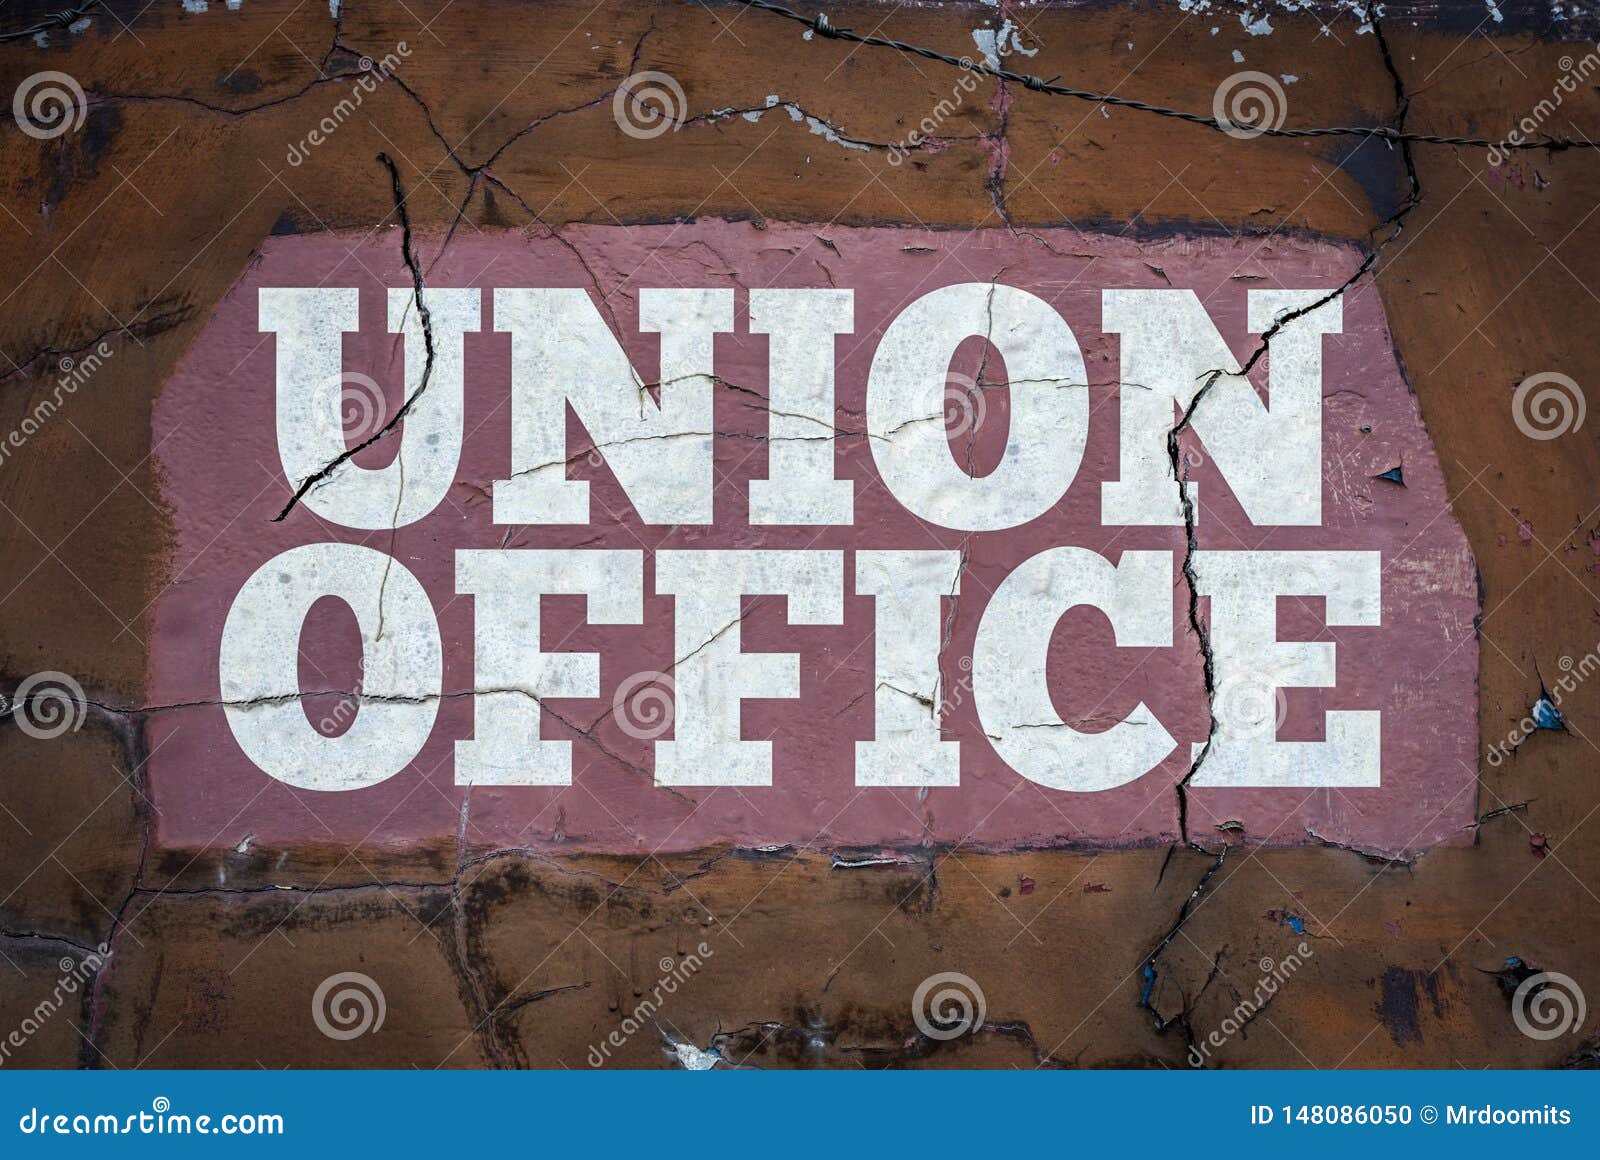 union job office